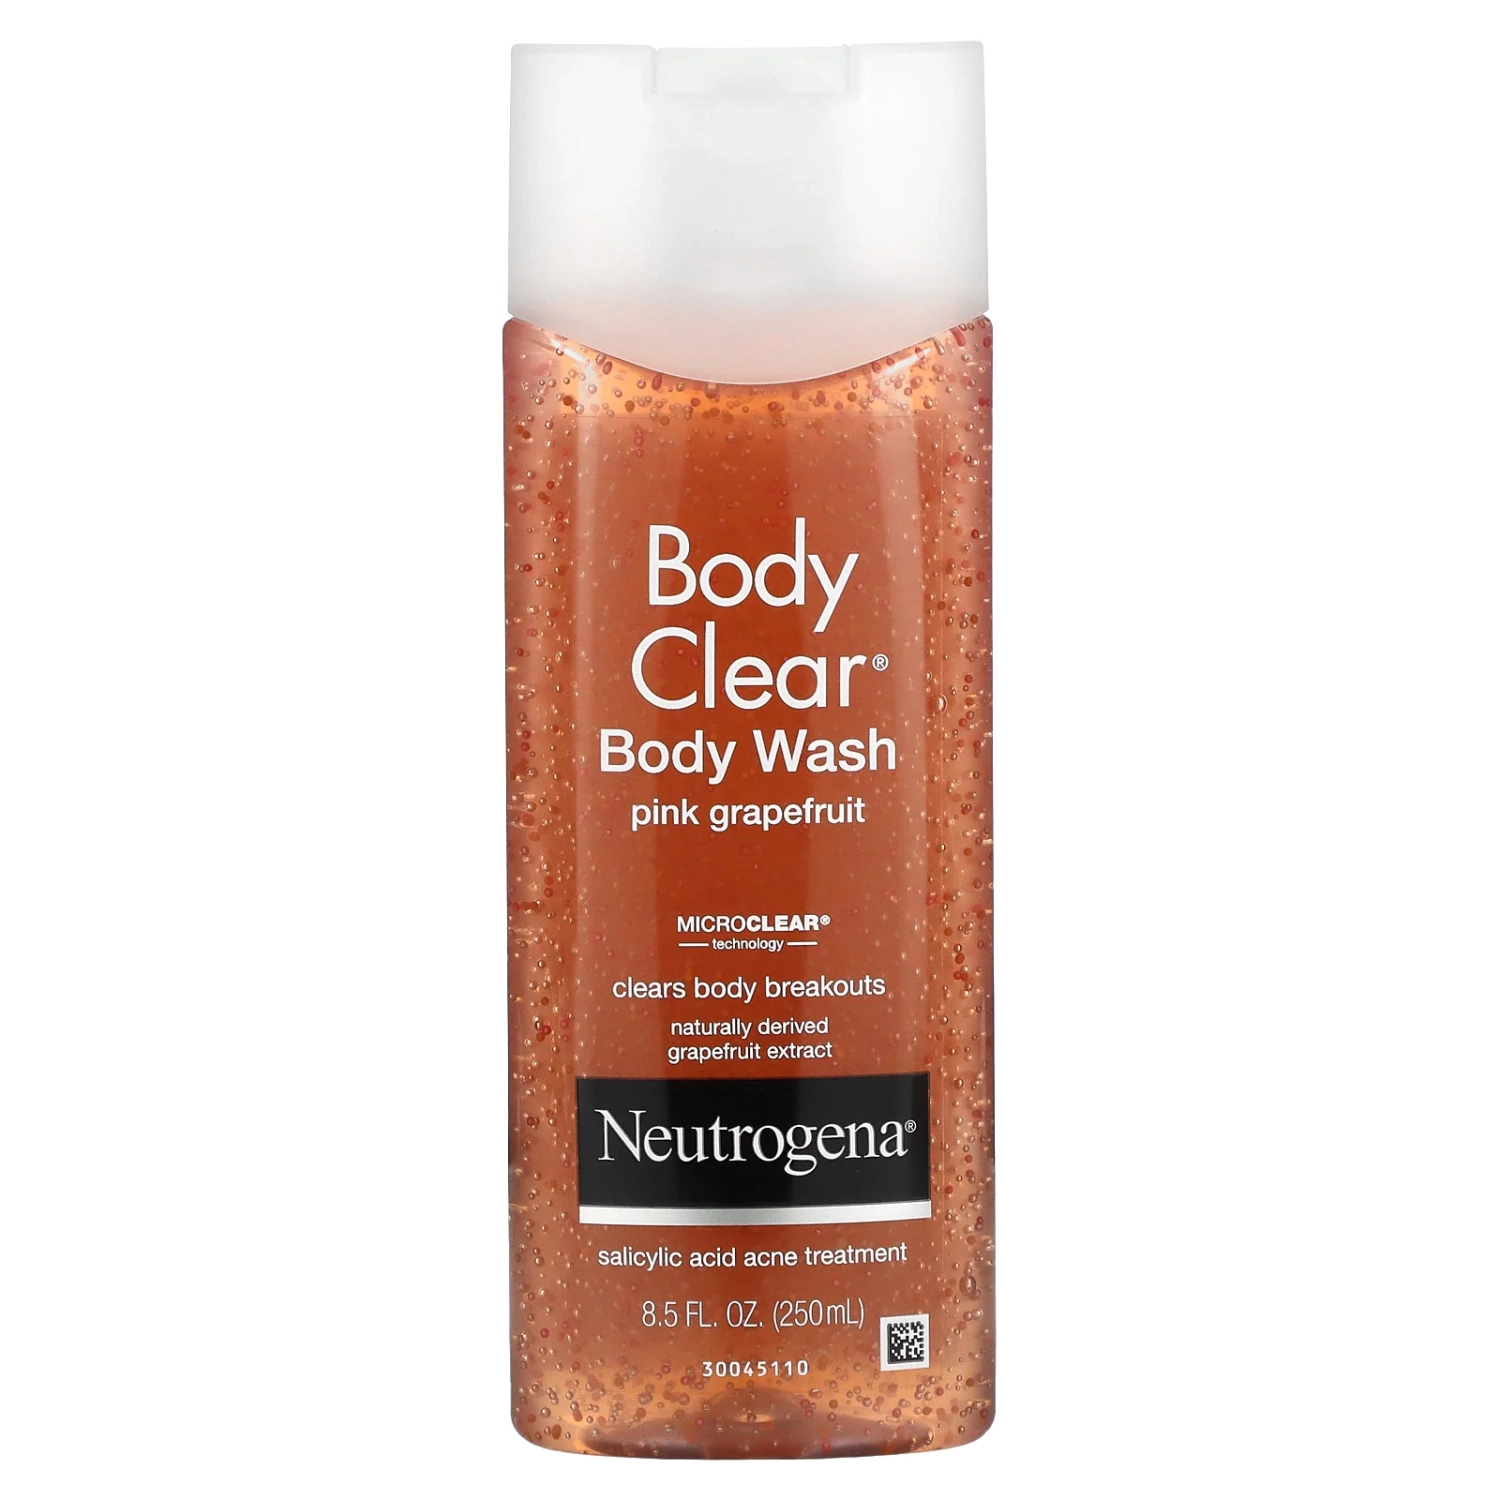 Neutrogena Body Clear Acne Body Wash - Maximum Strength Salicylic Acid, Vitamin C - Oil Free - Pink Grapefruit Scent - 250ml